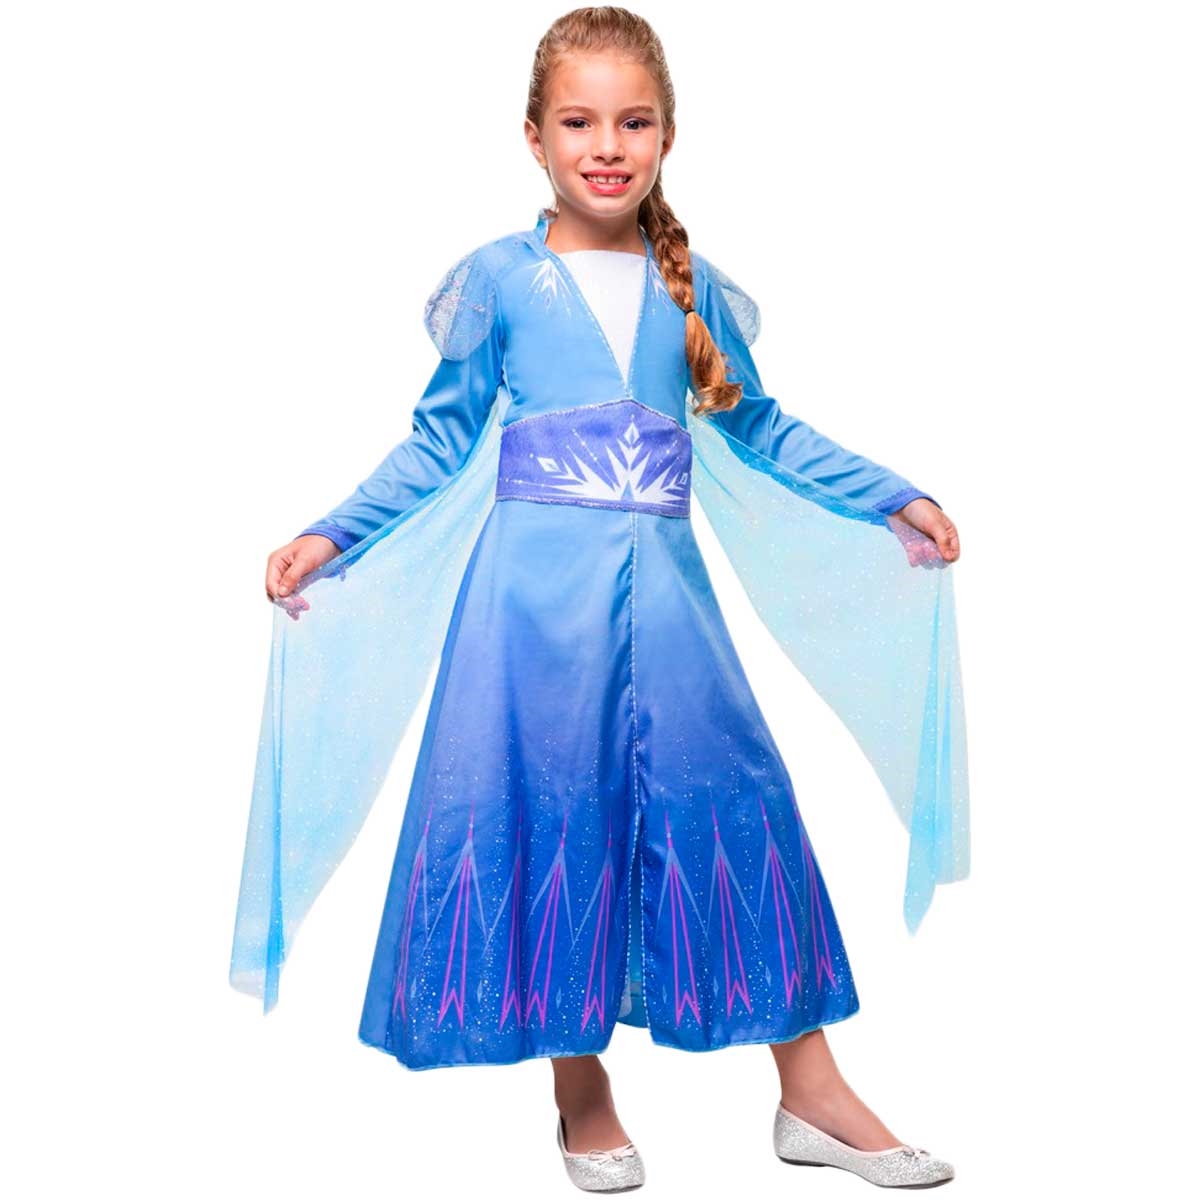 Fantasia Frozen 2 Infantil Vestido Princesa Elsa de Luxo Disney